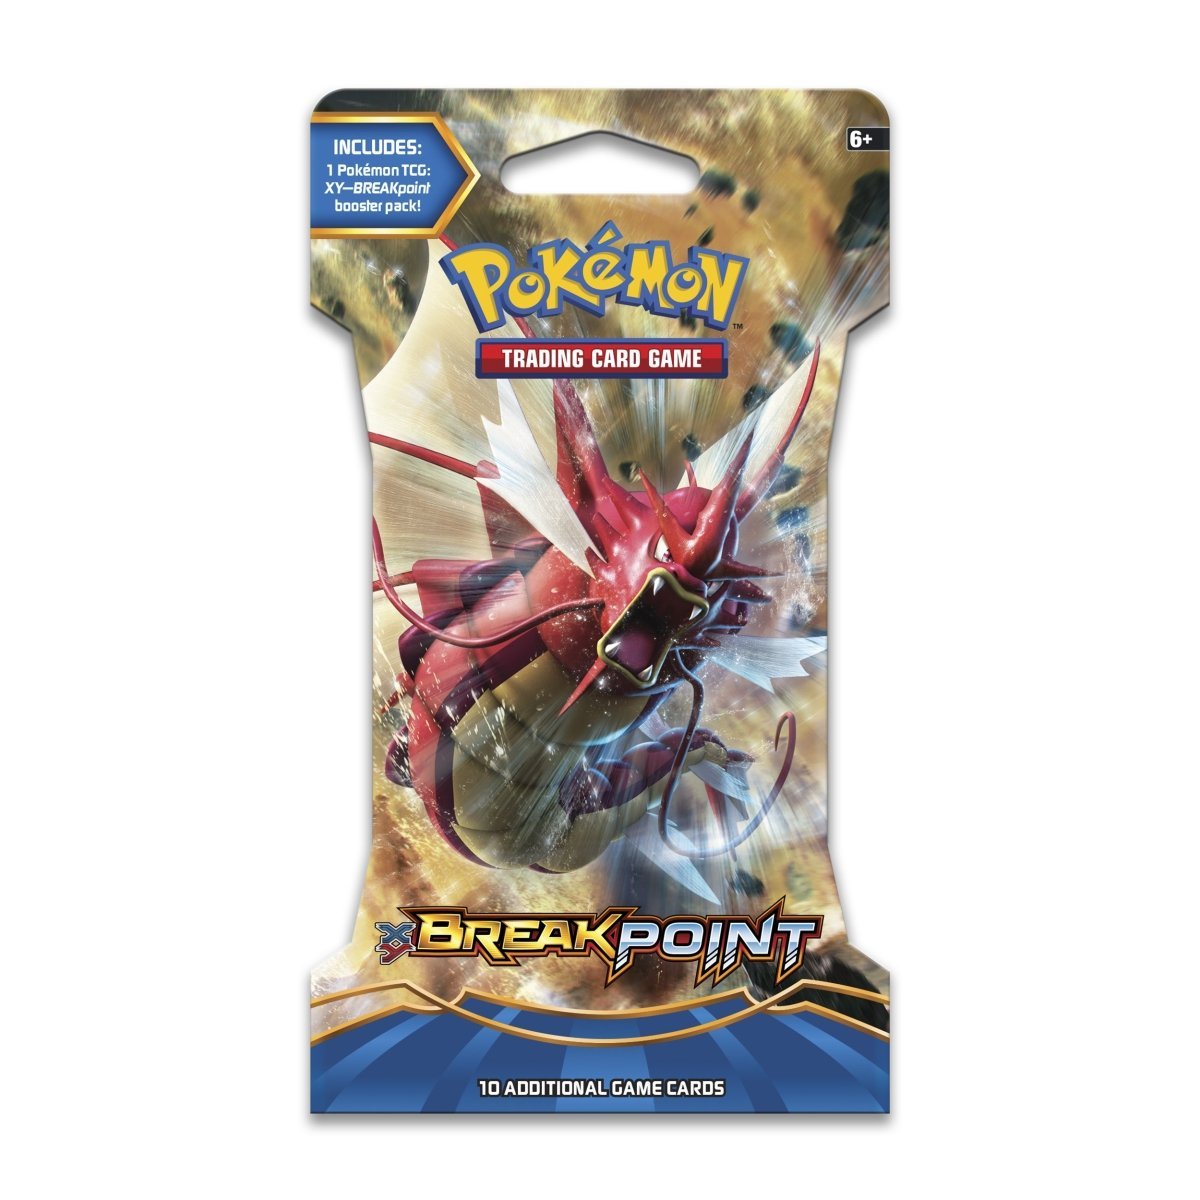 Pokémon TCG: XY - Breakpoint Sleeved Booster Pack - PokeRvm